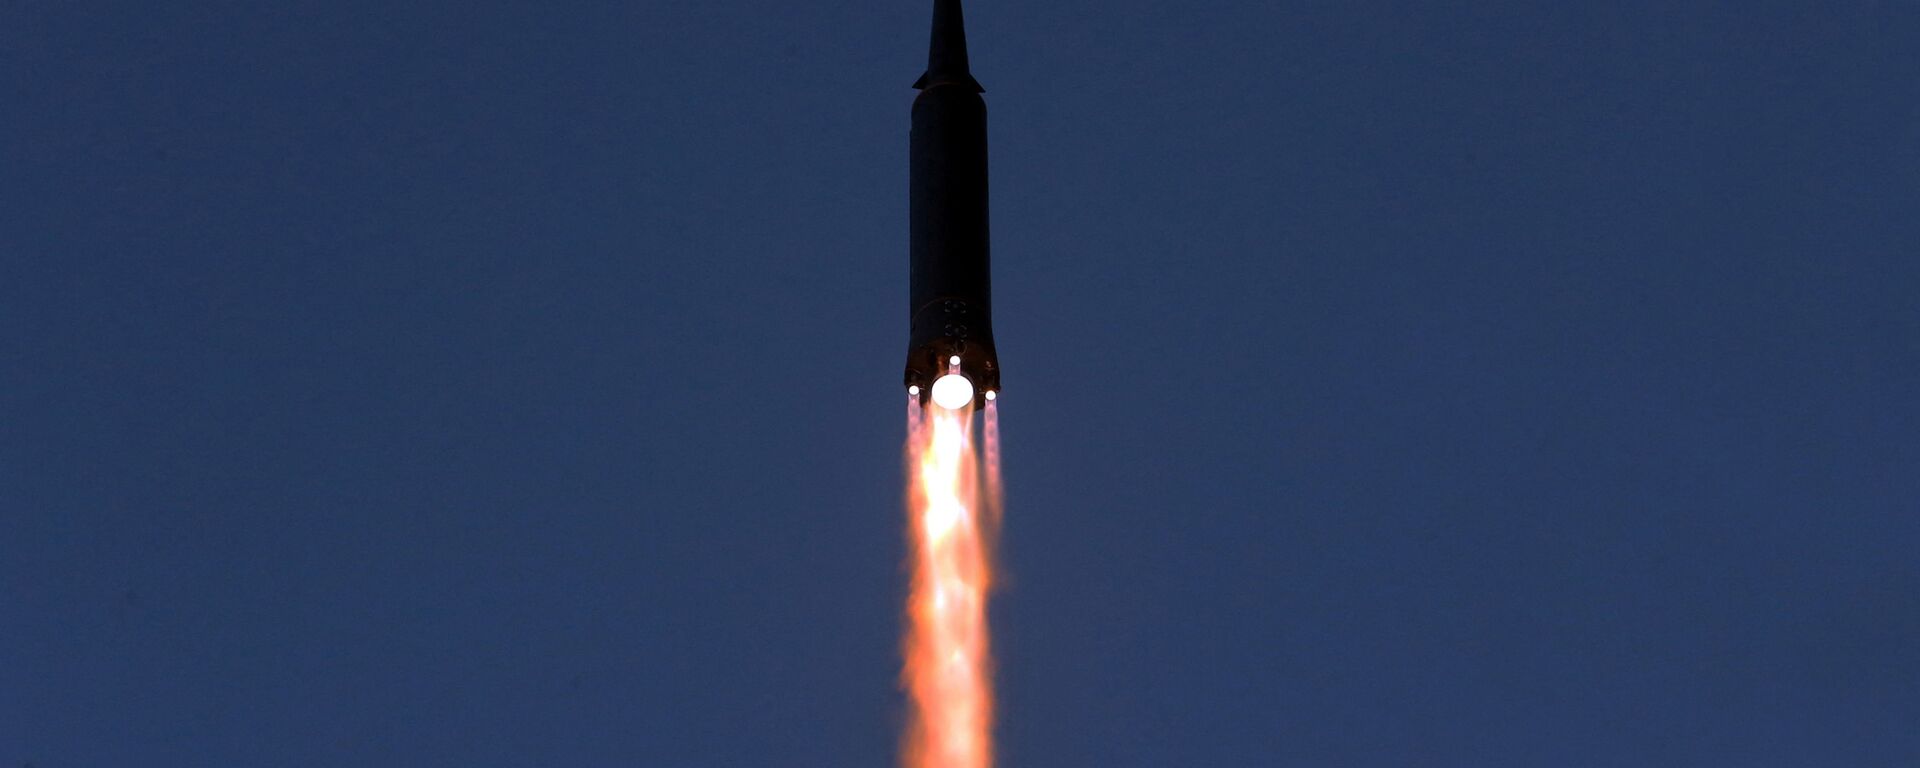 Запуск ракеты в КНДР  - 同情之情, 1920, 12.01.2022